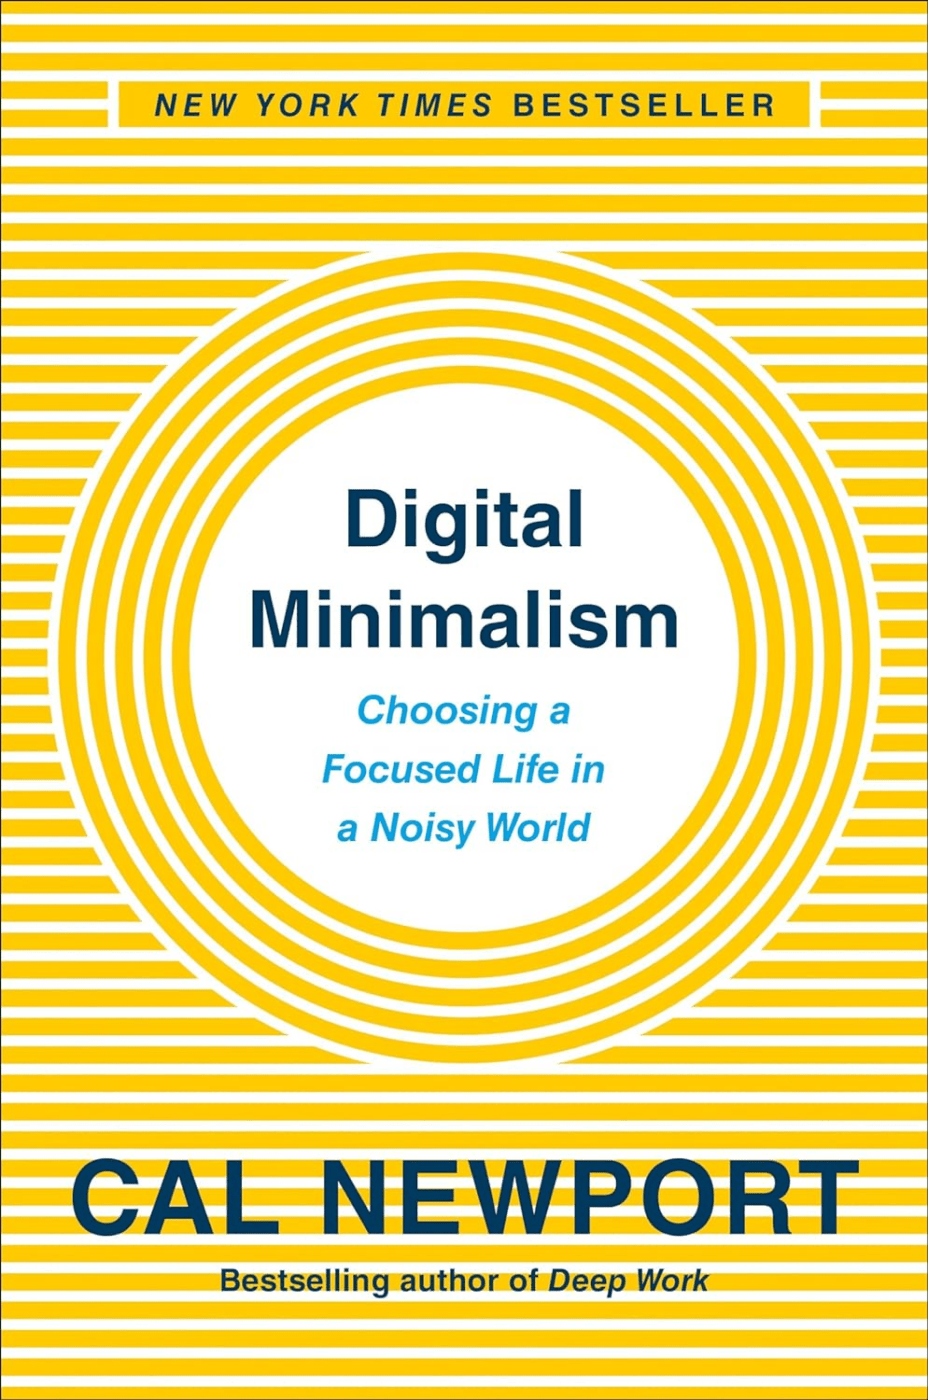 Digital Minimalism Summary at Glance